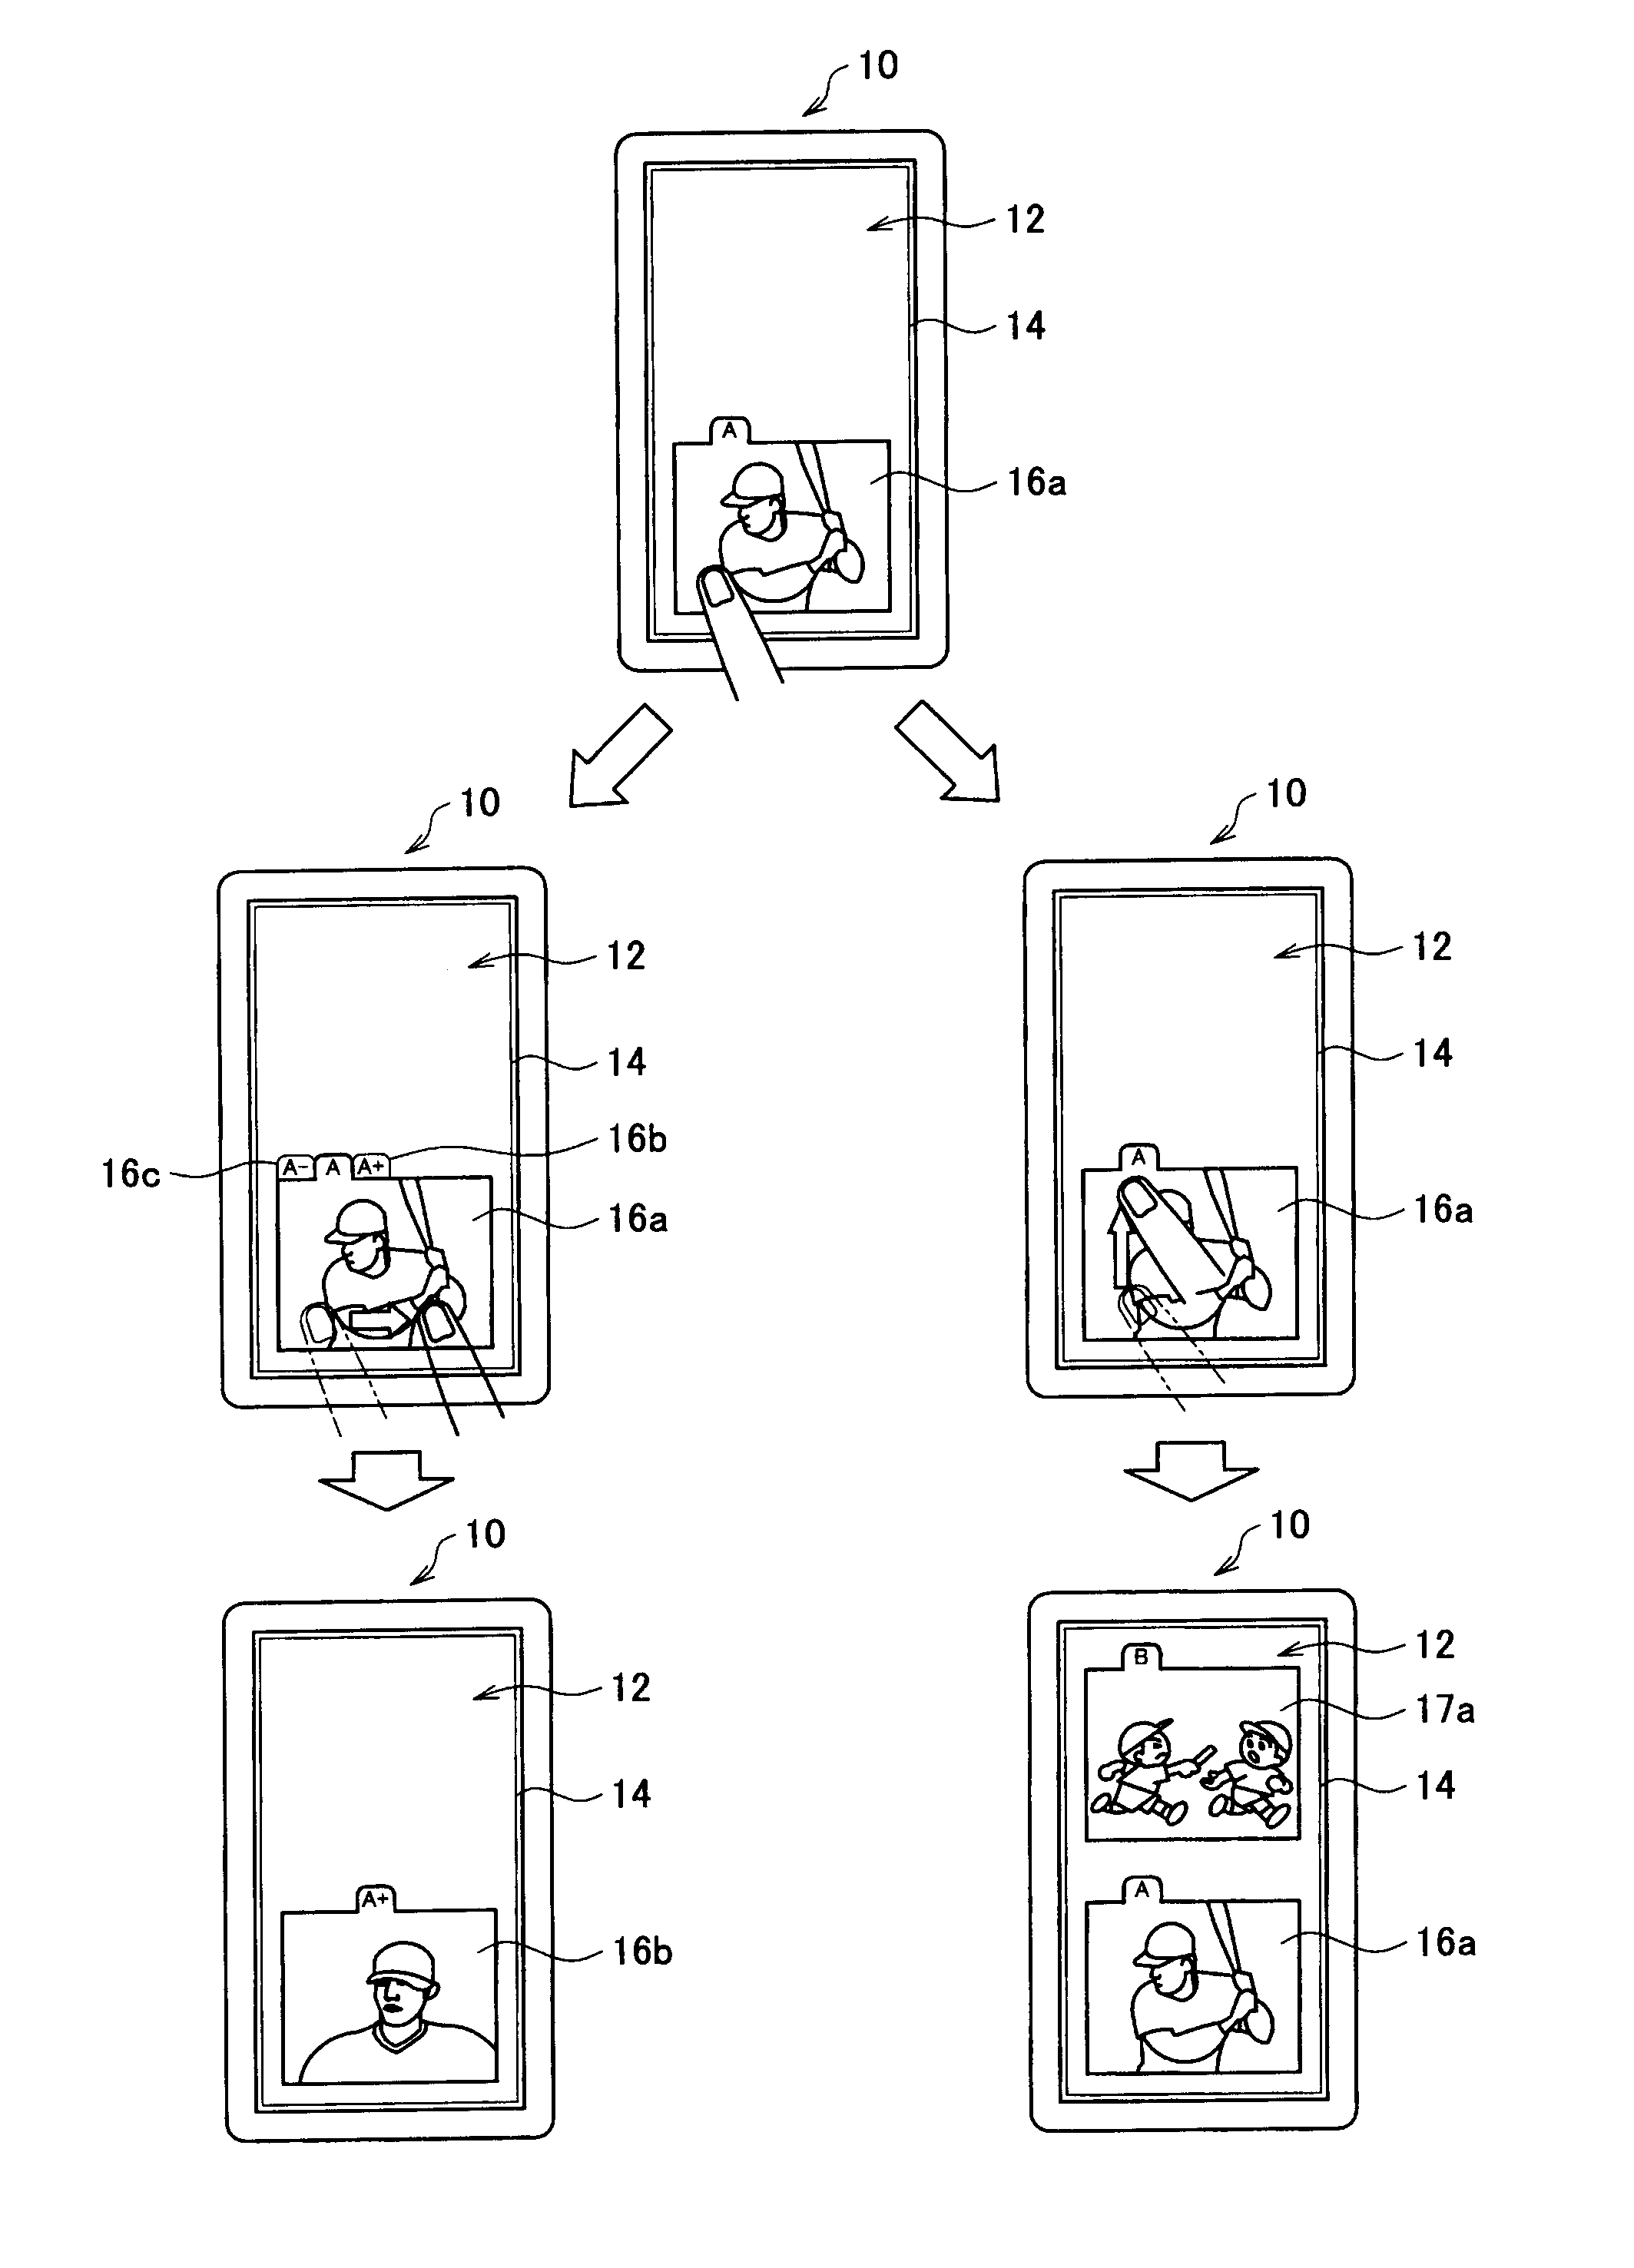 Display Apparatus, Display Method, and Program